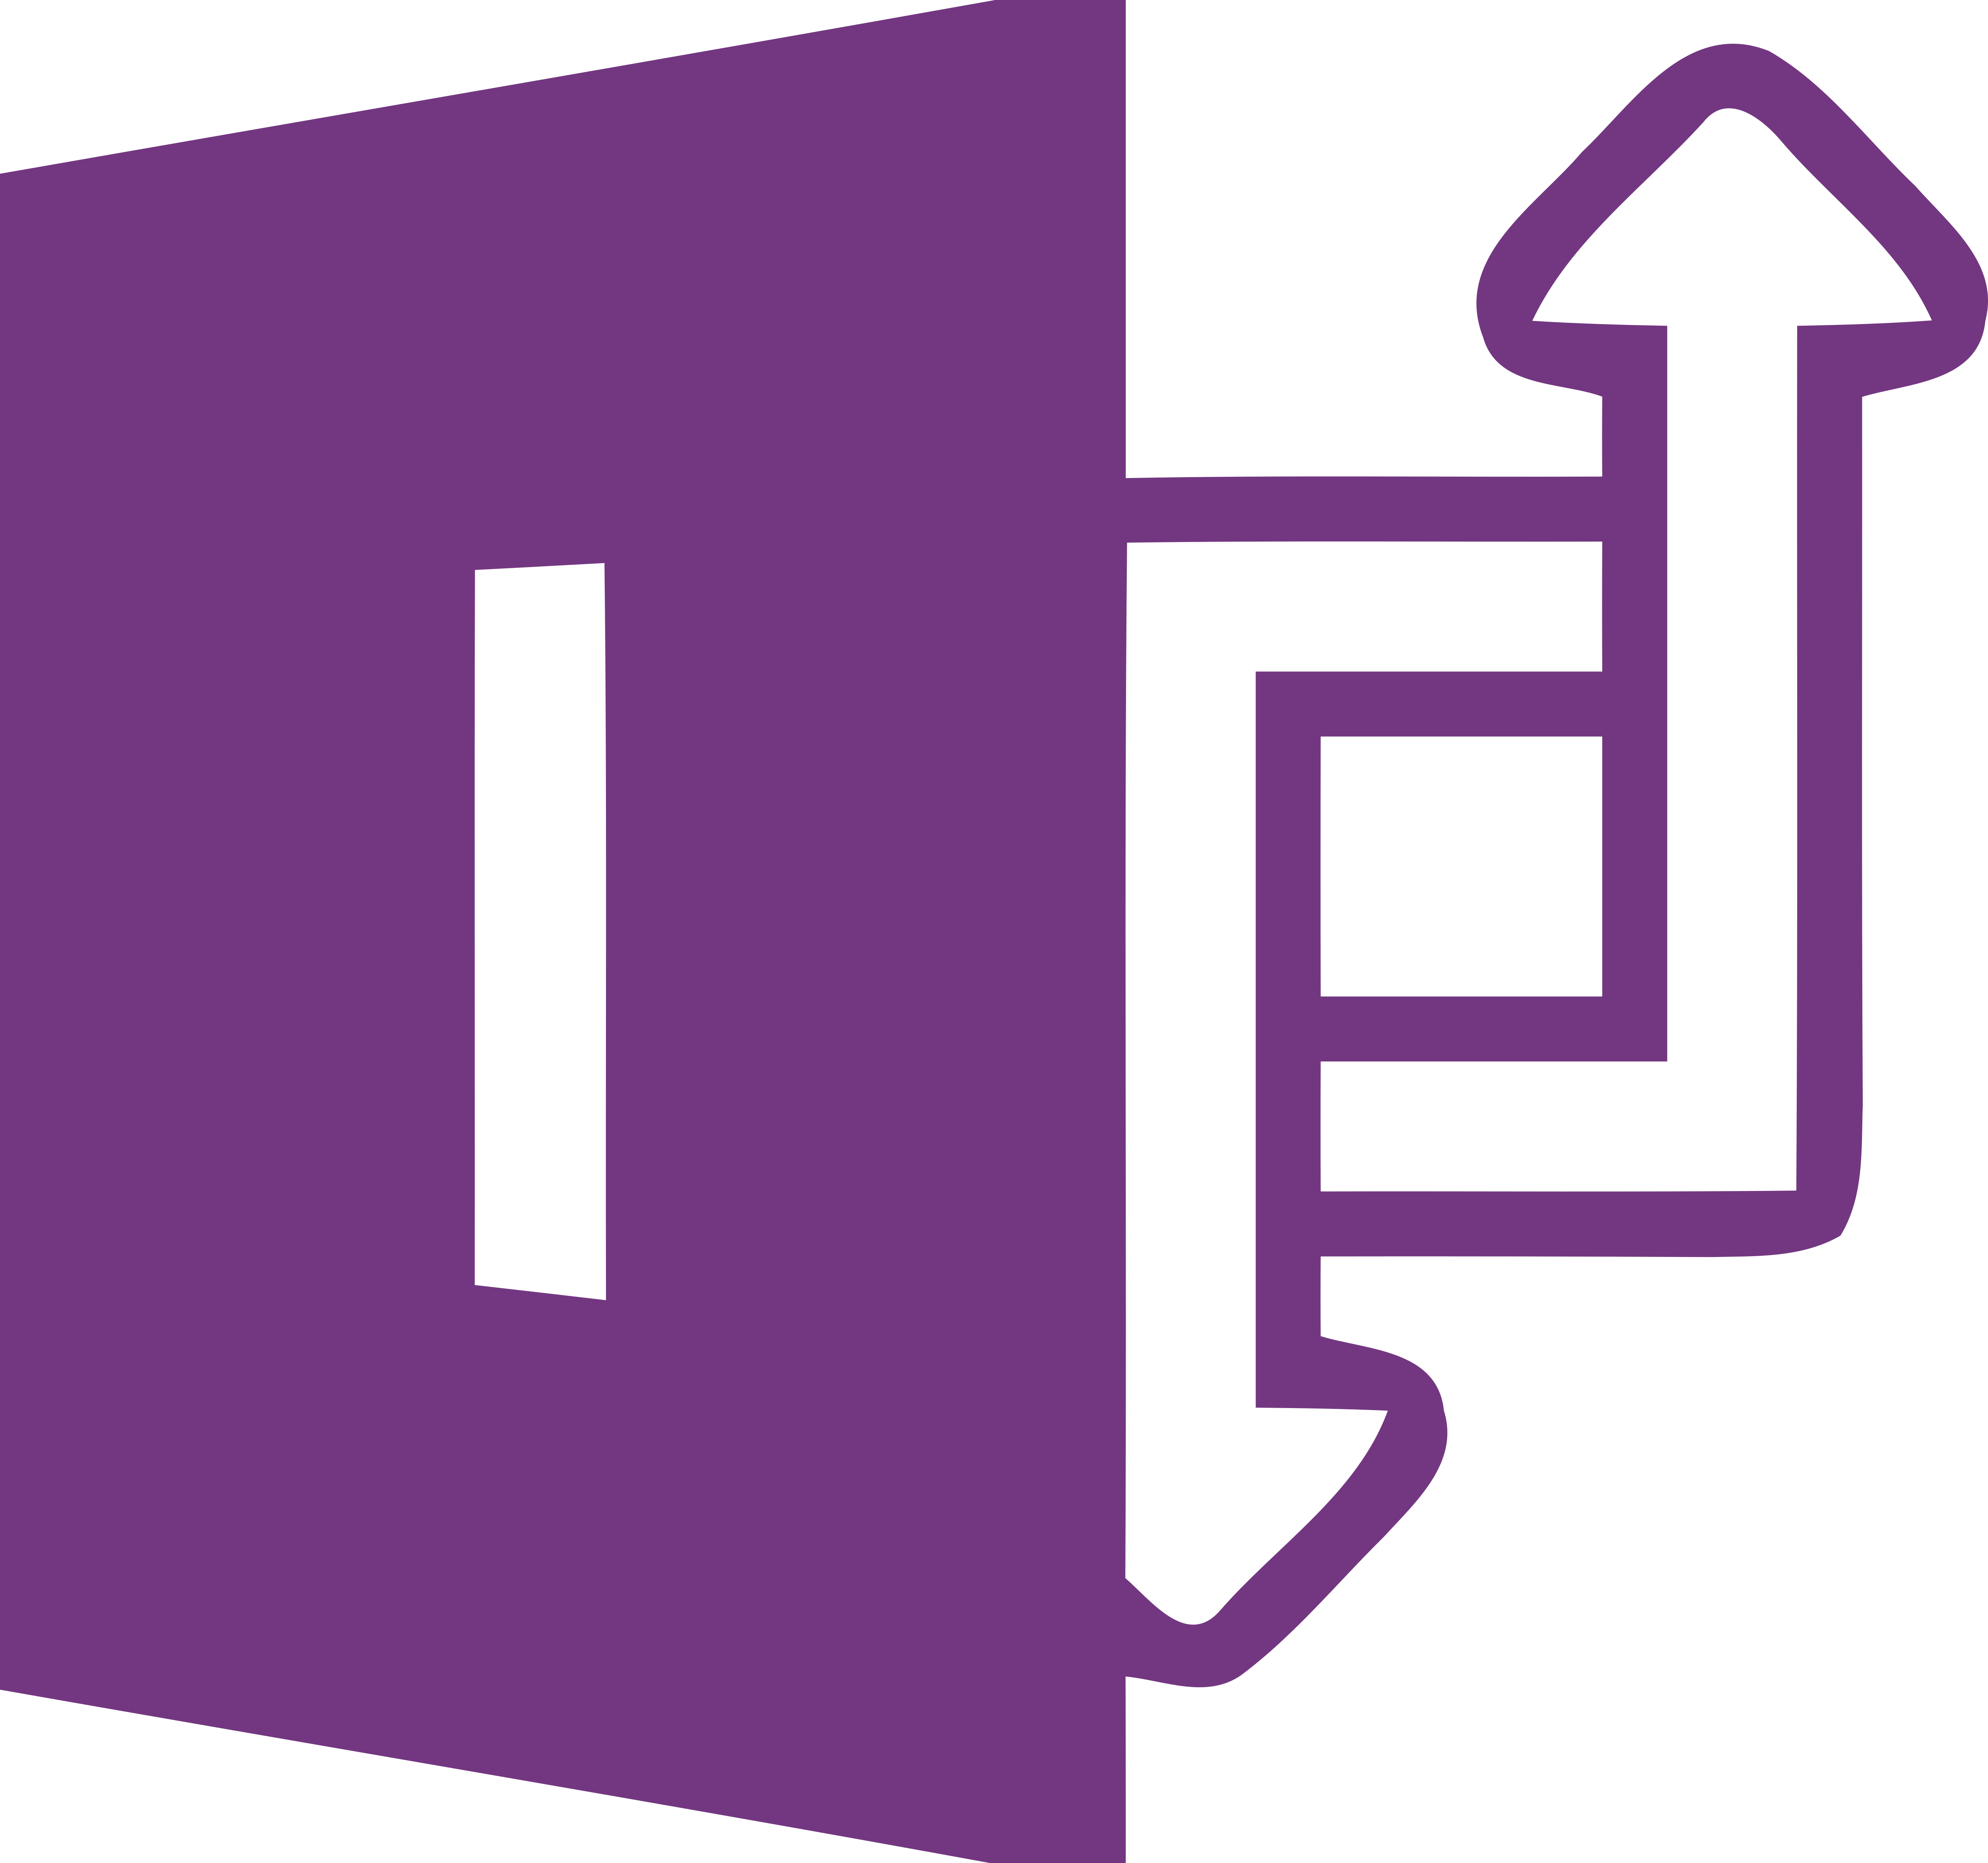 Microsoft Office Infopath 2013 Logos Download